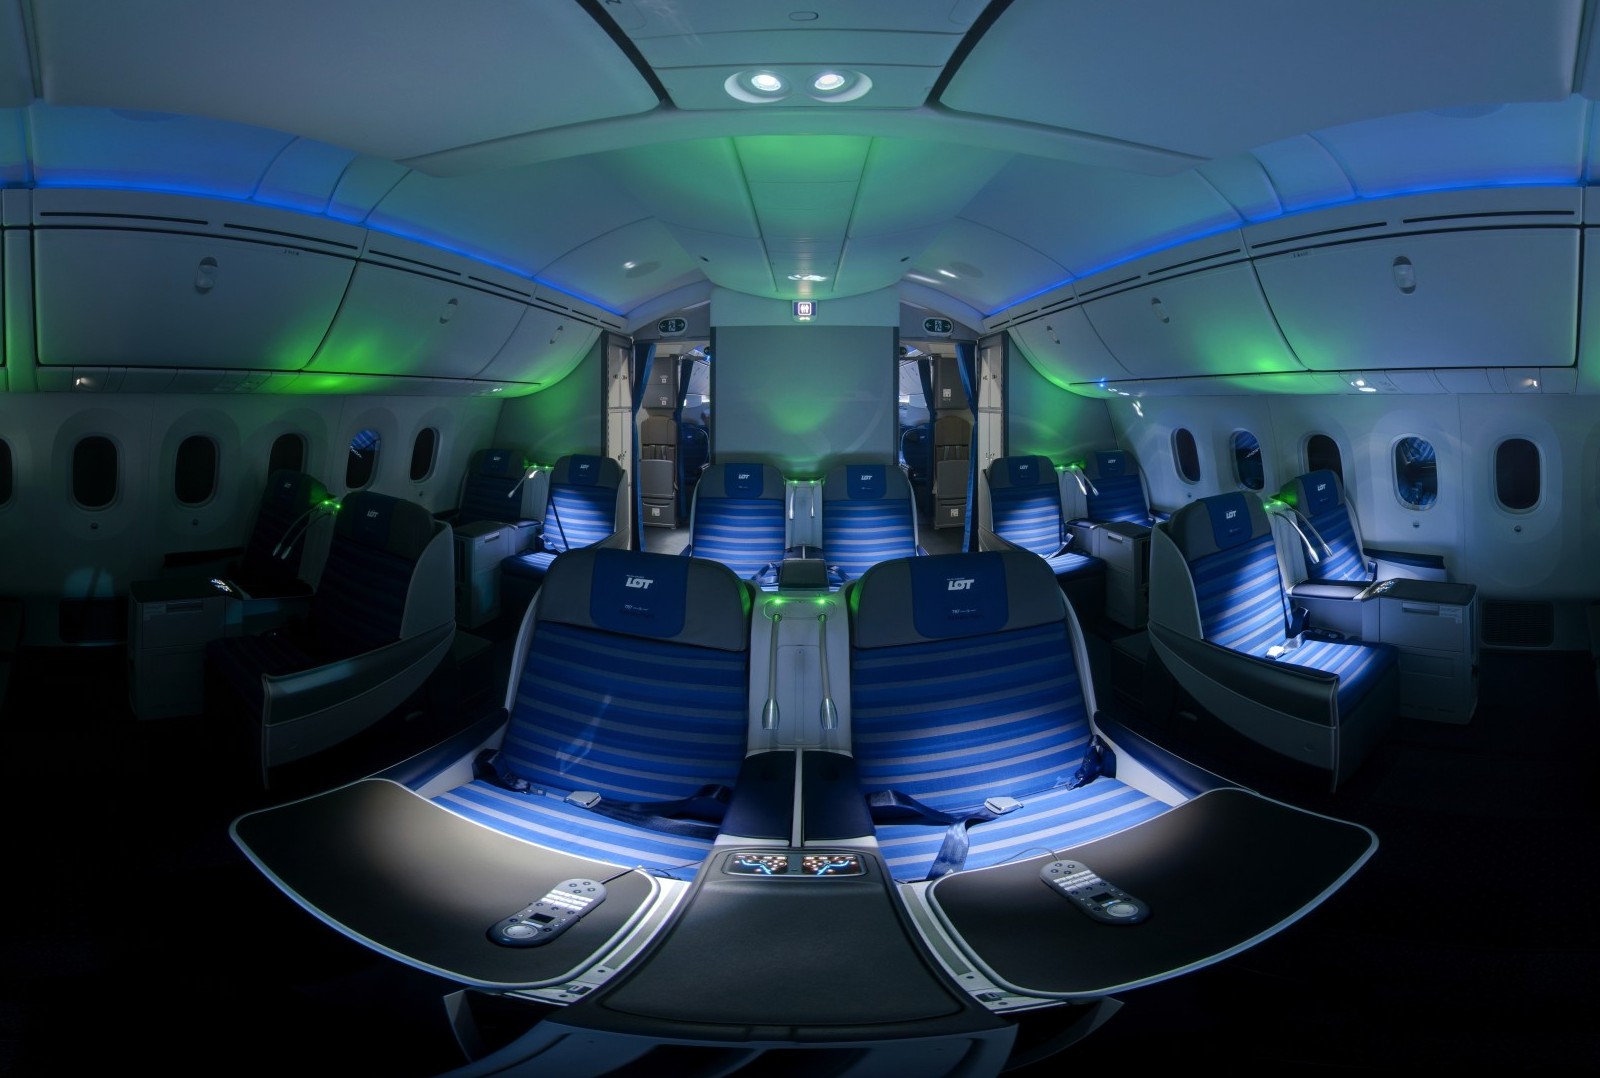 Boeing 787 Dreamliner - panoramy 360